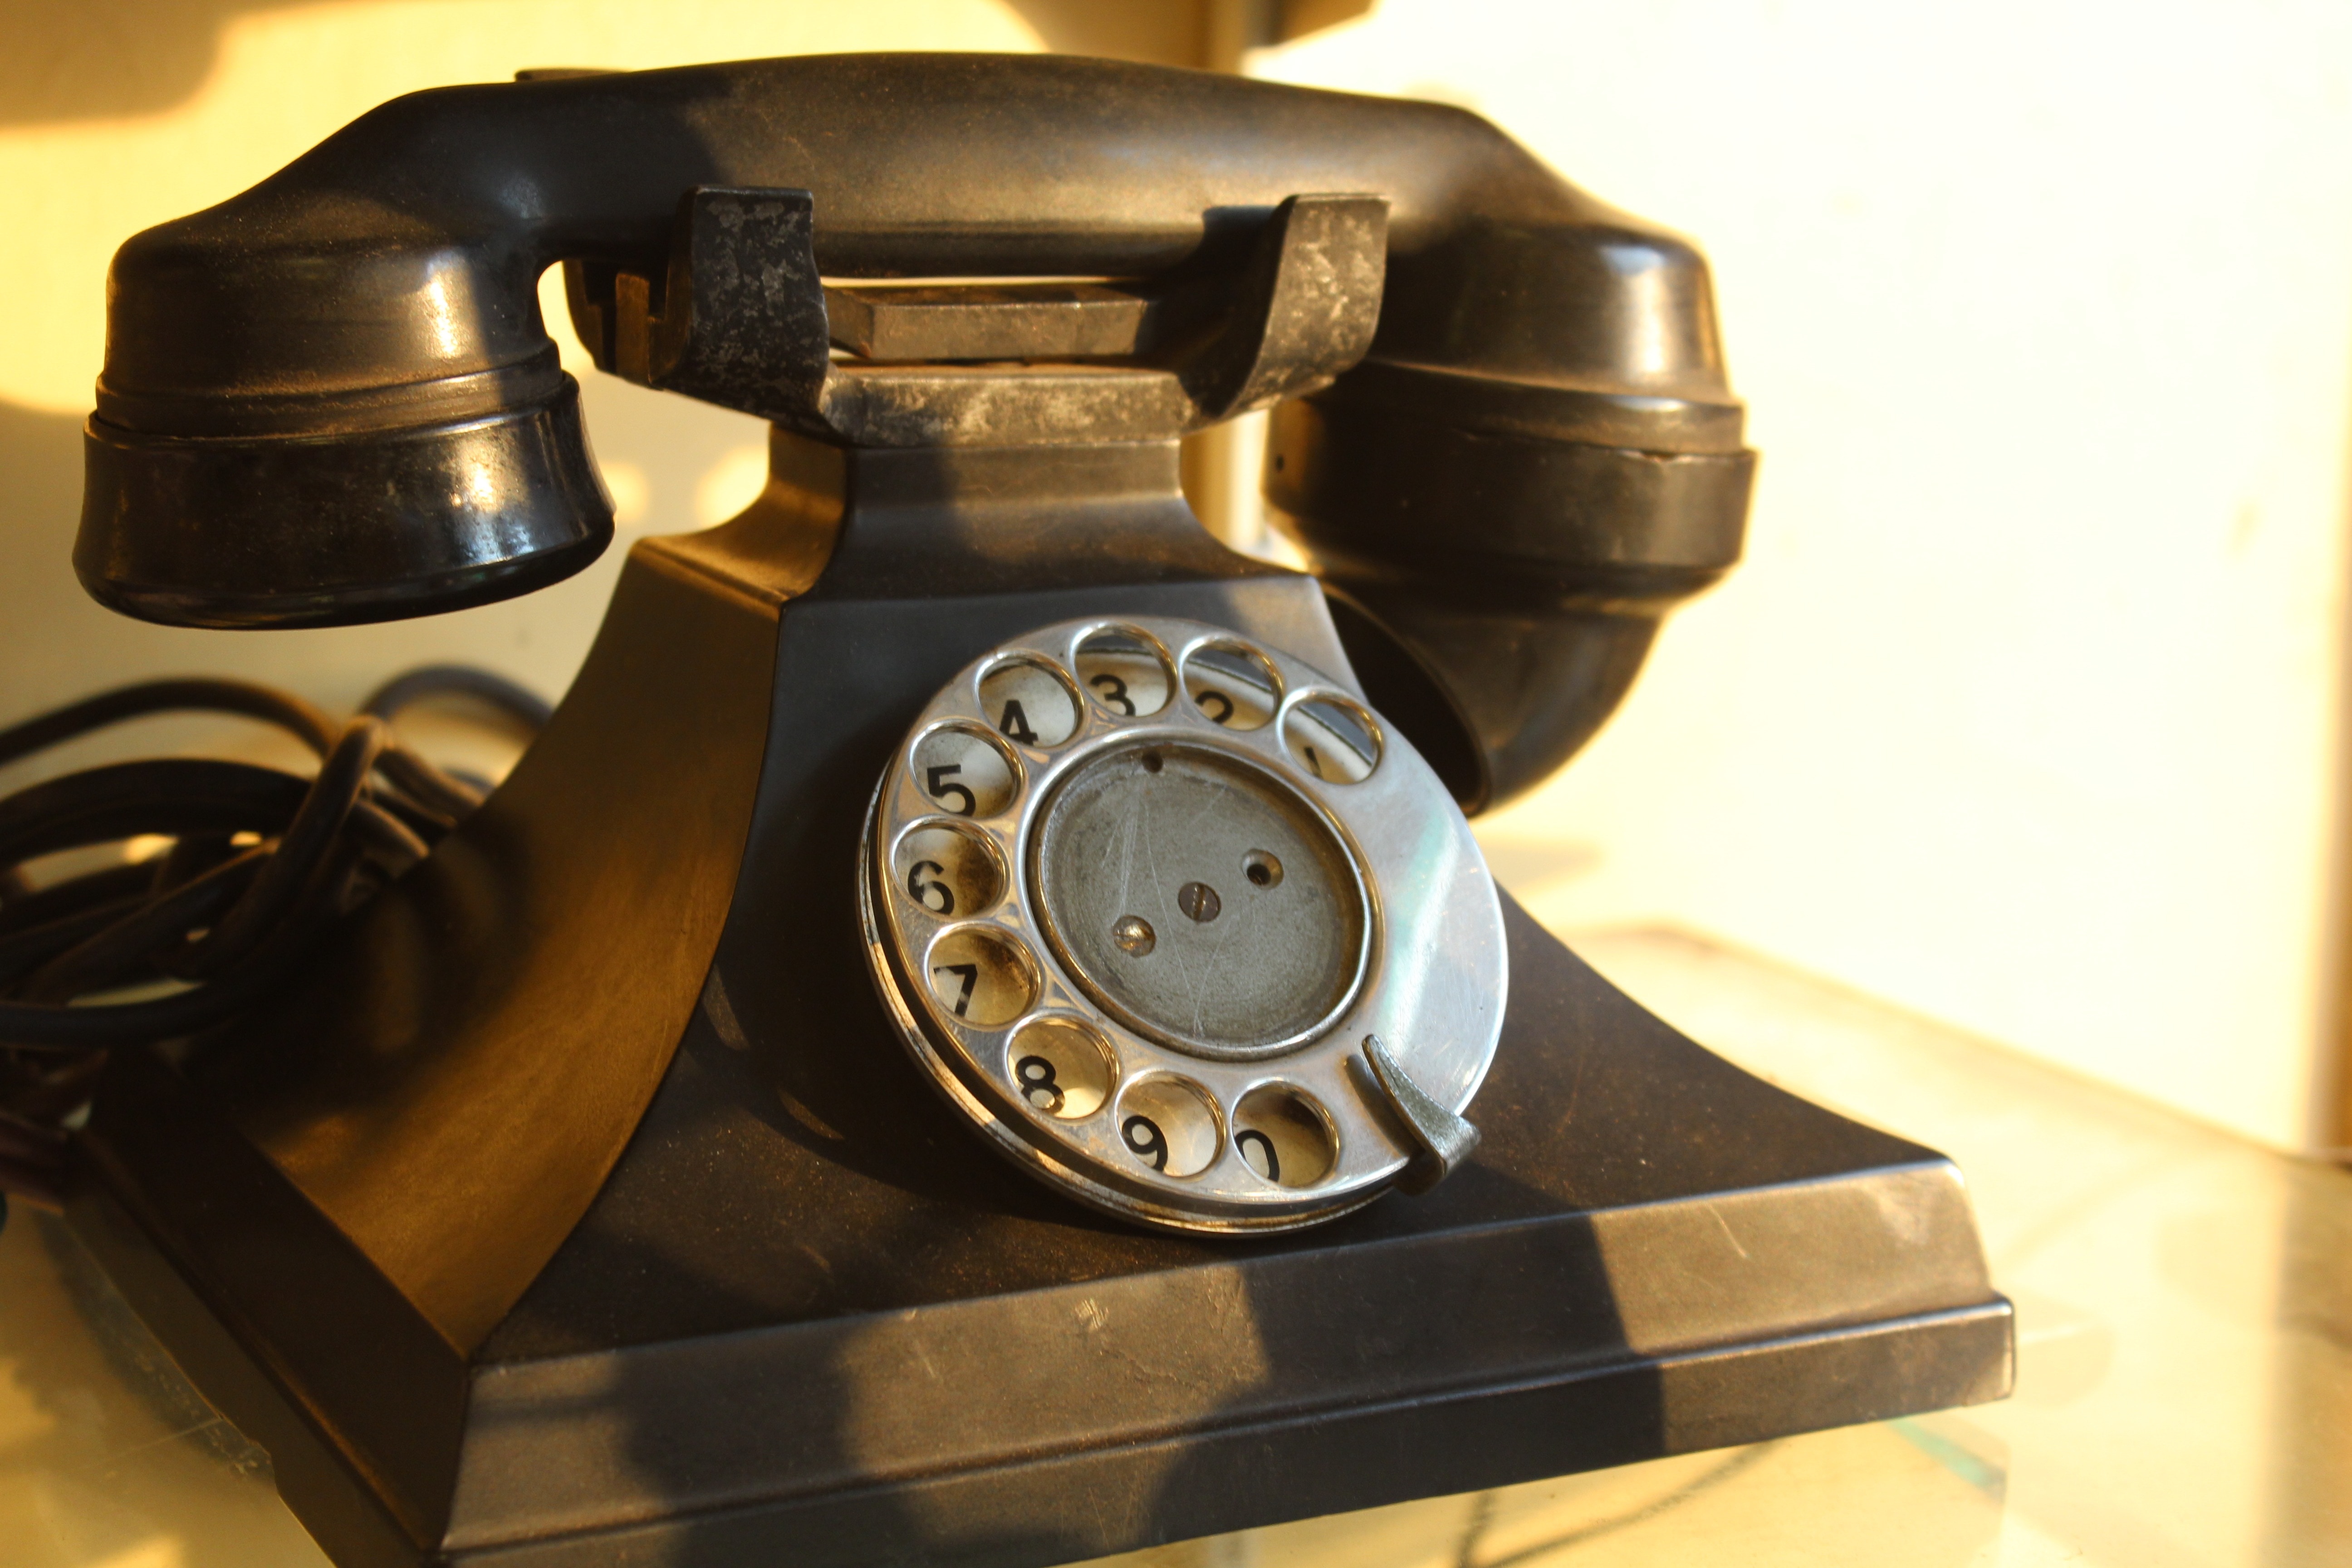 Phone, Vintage, Telephone, Antique, old-fashioned, retro styled